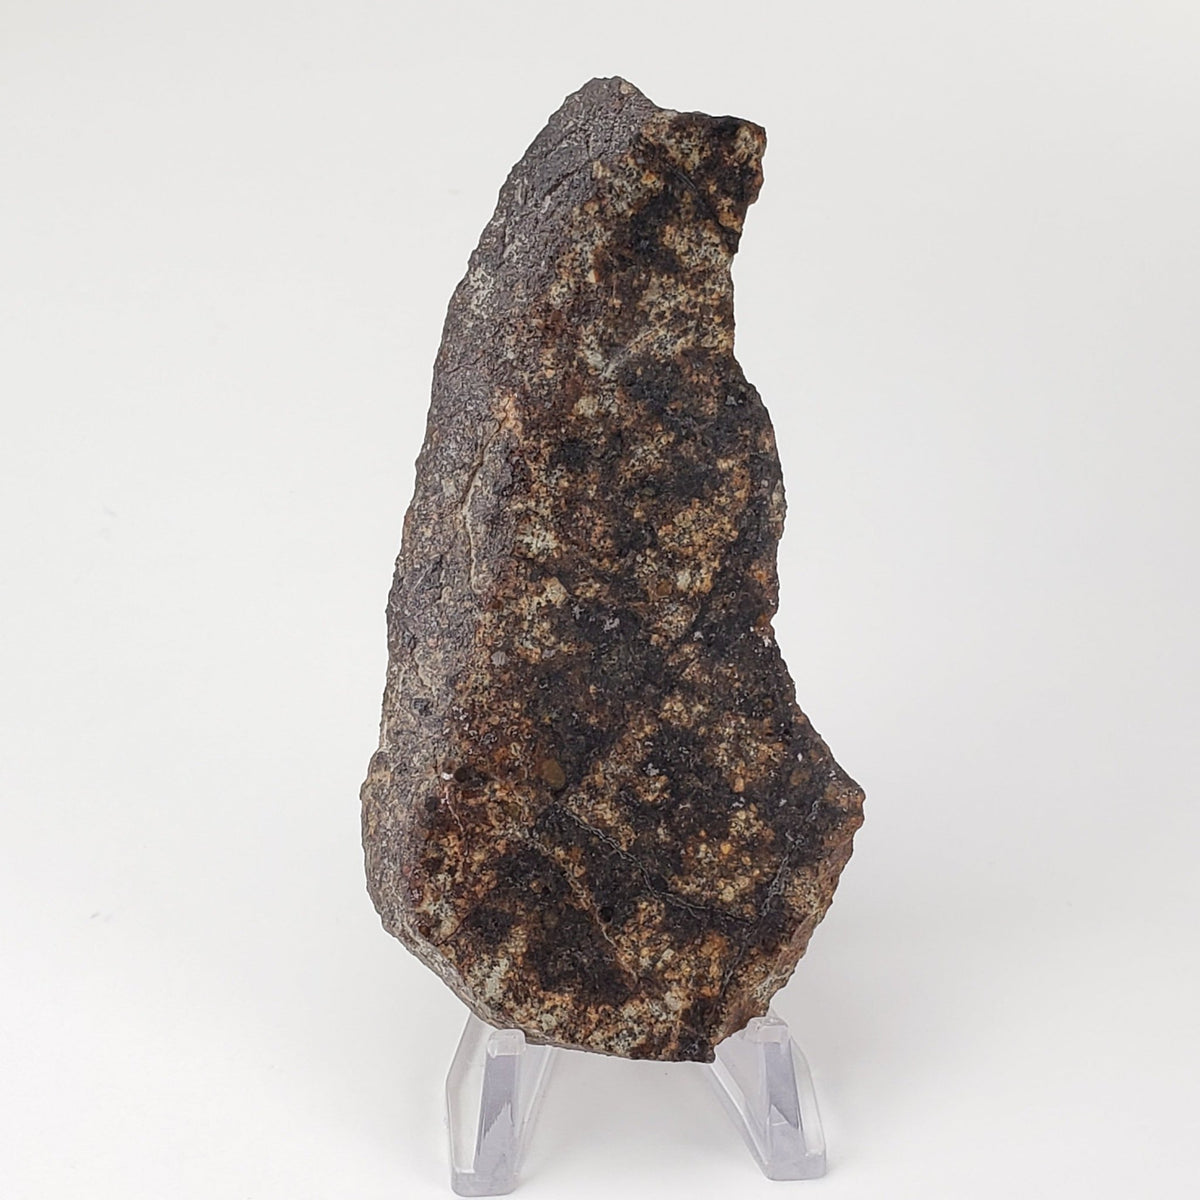 NWA 250 Meteorite | 55.70 Gr | Slice | L6 Chondrite | Sahara